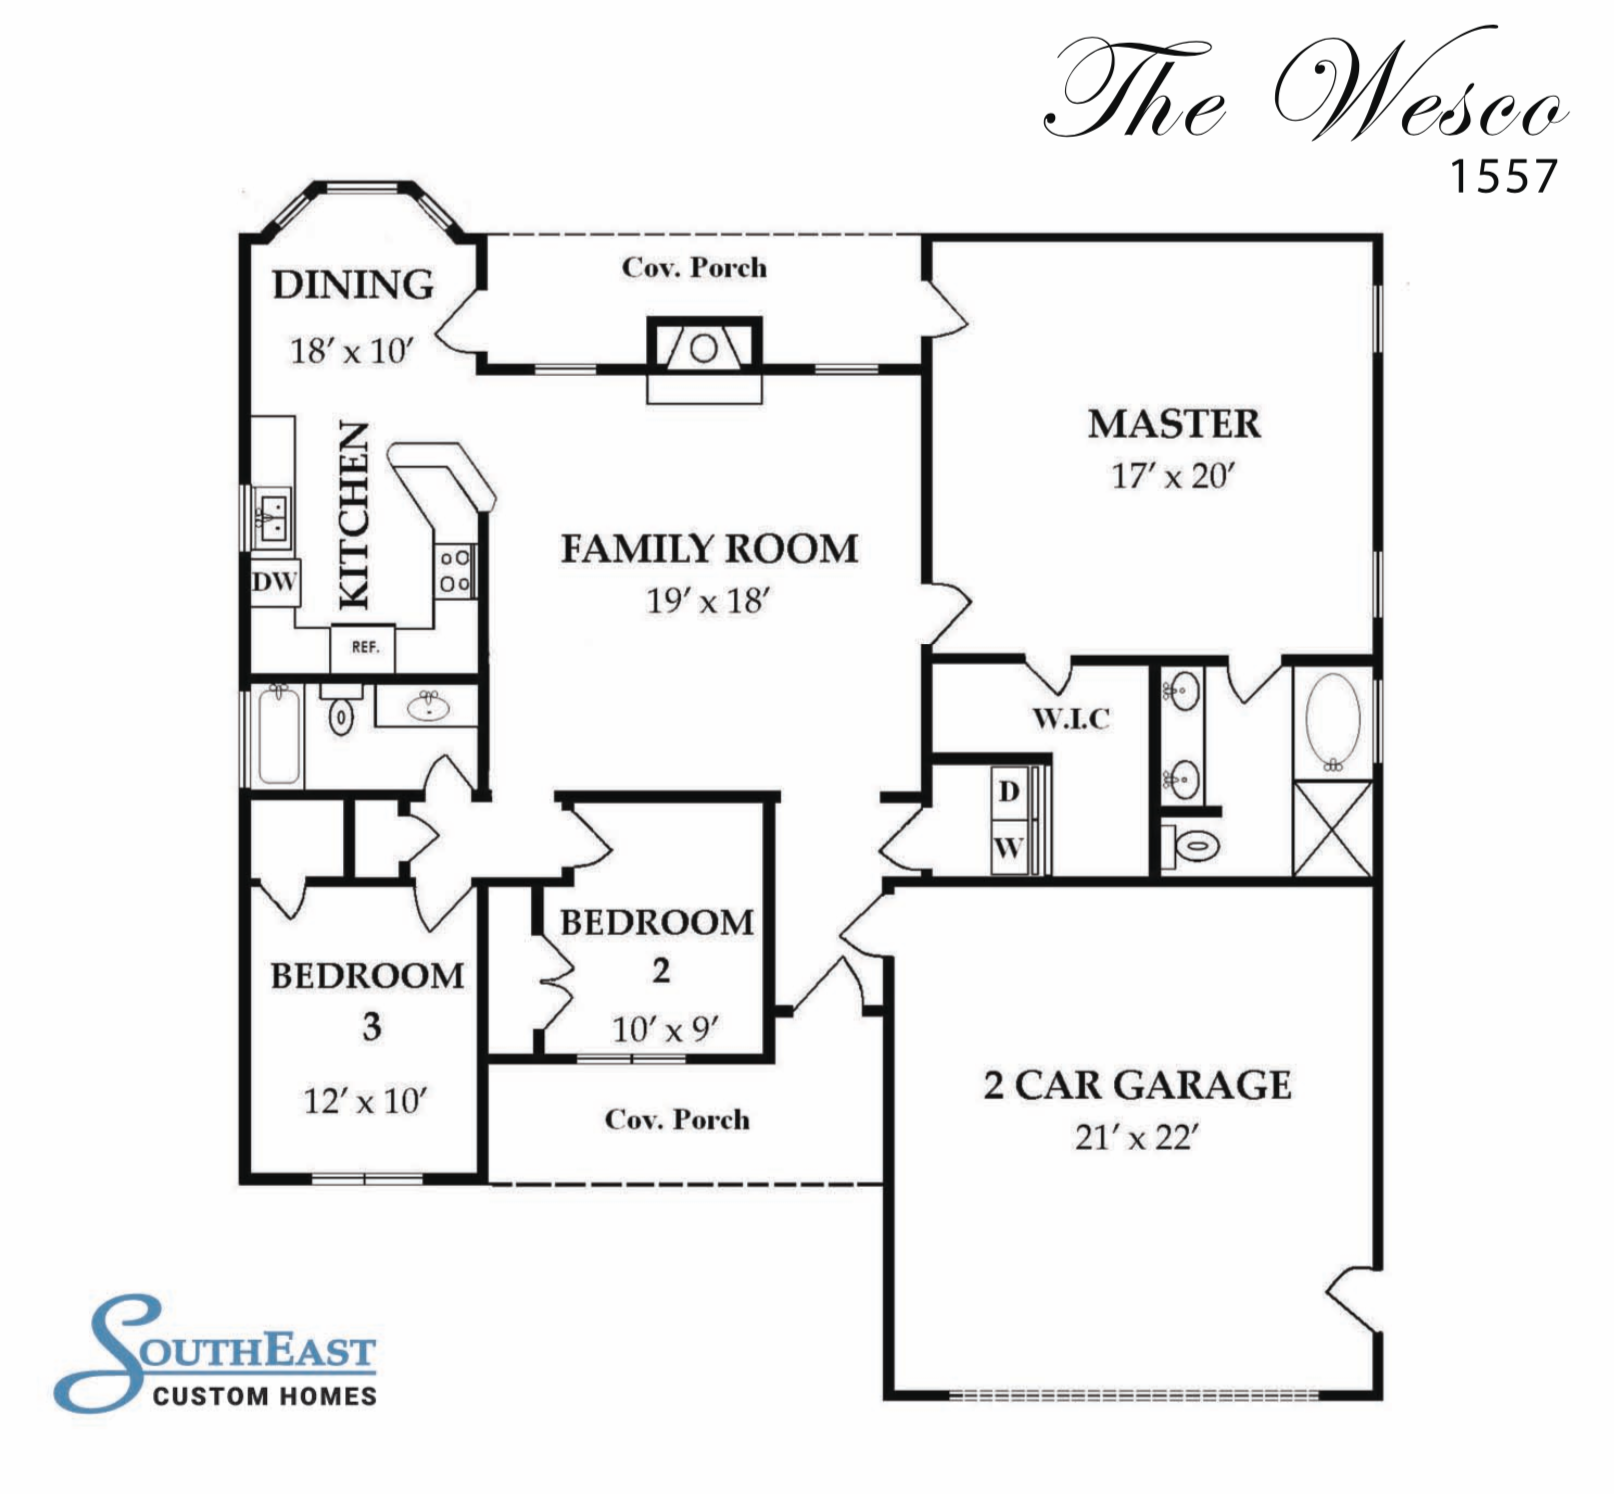 The Wesco floor plan image